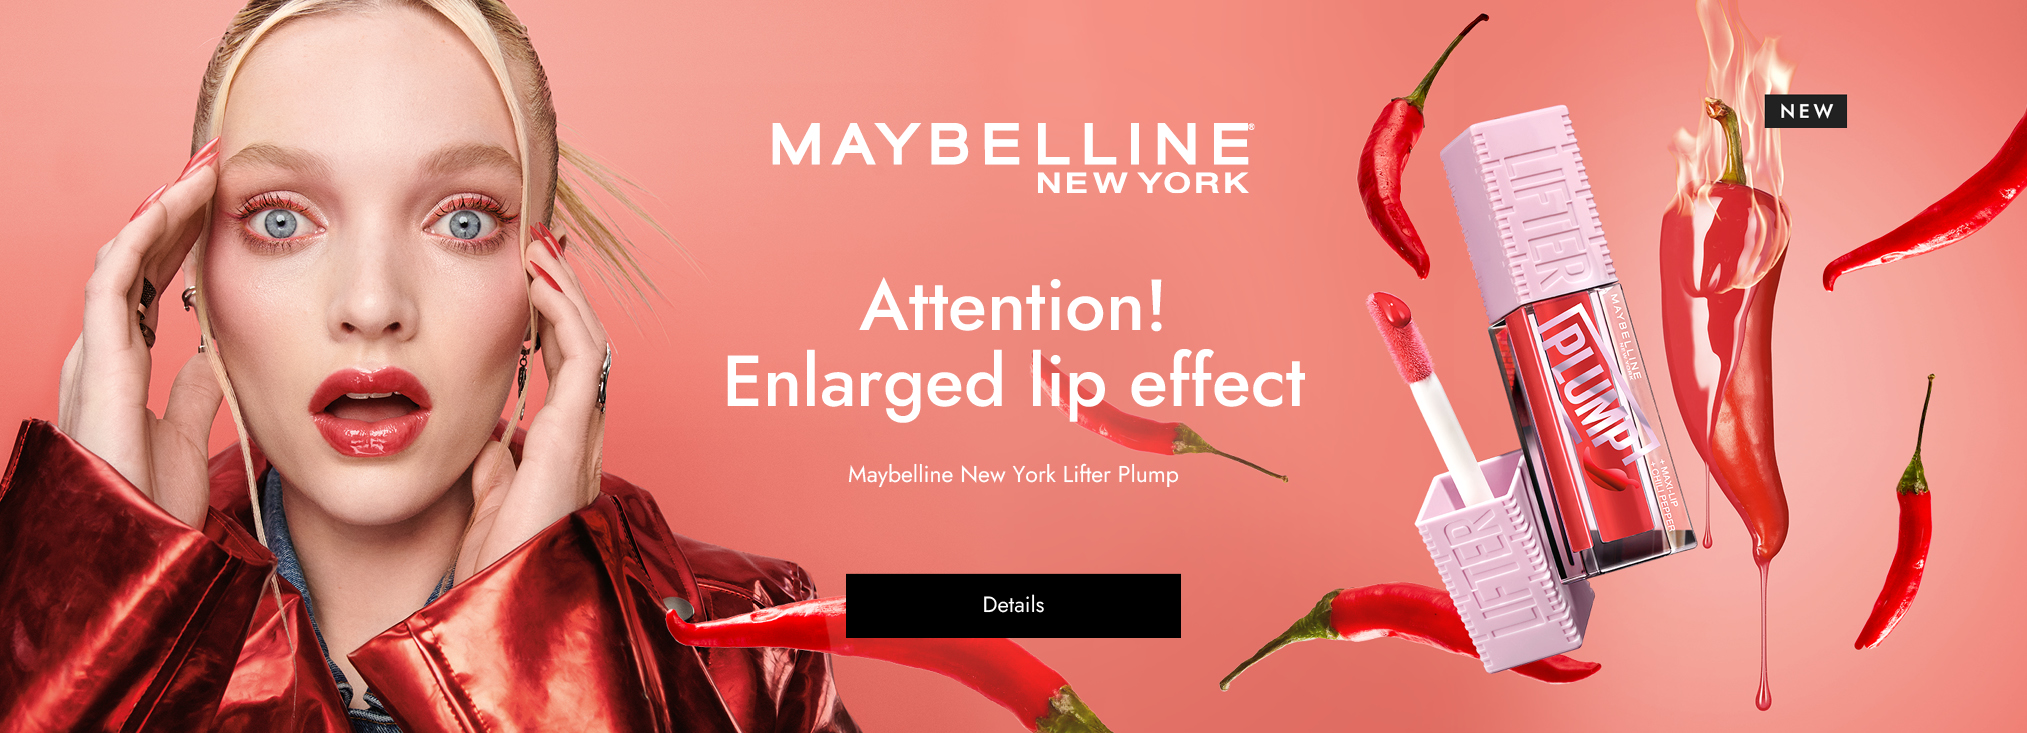 Maybelline New York_makeup